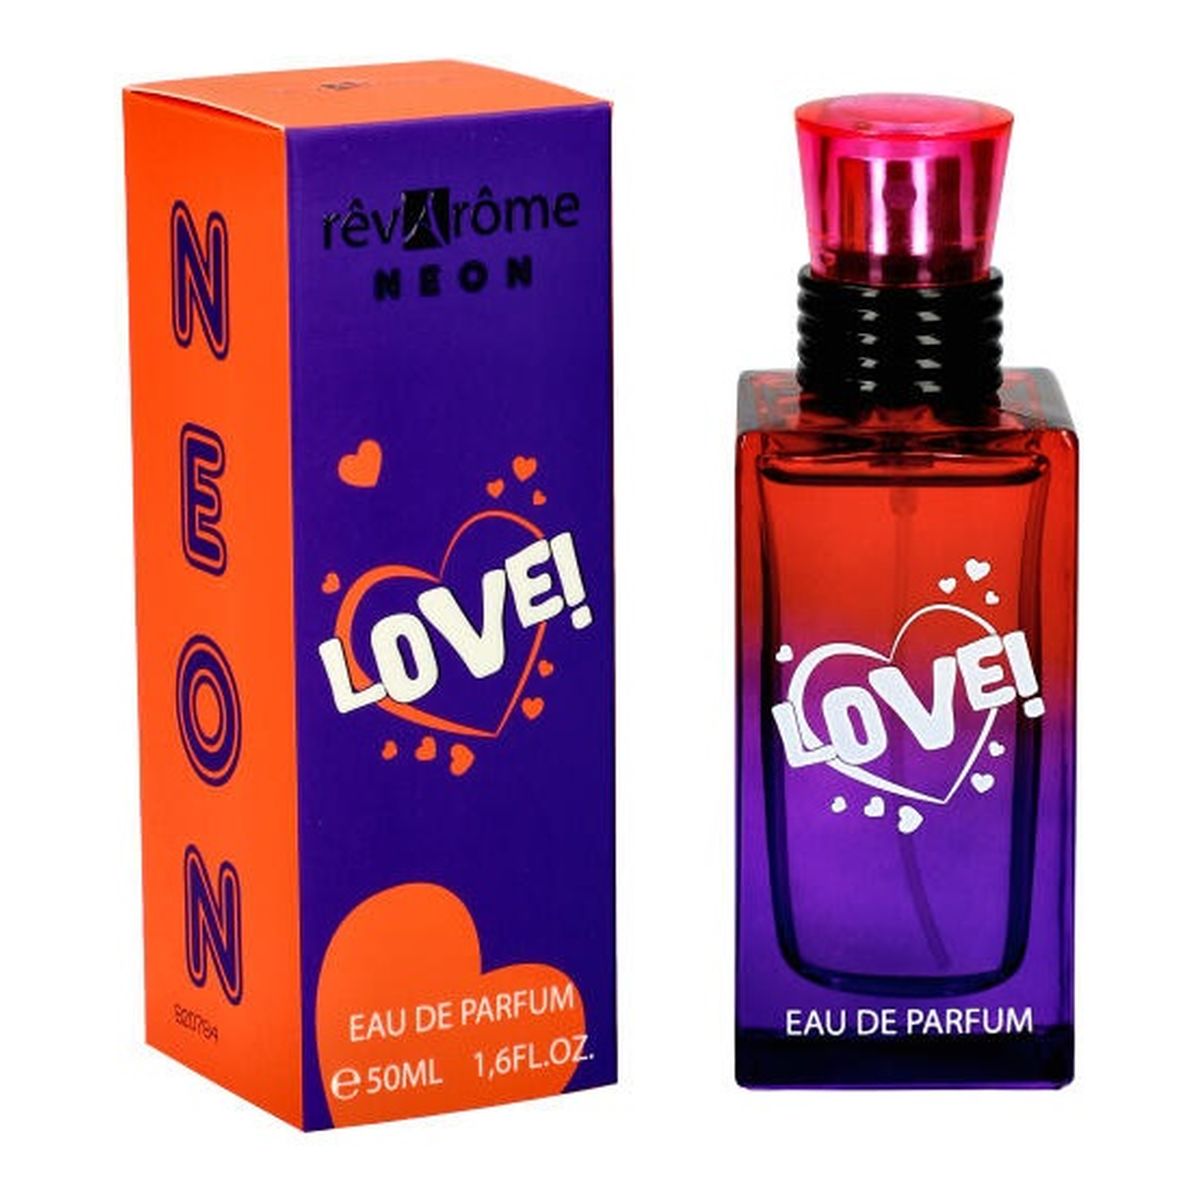 Revarome Neon Love! Woda perfumowana spray 50ml